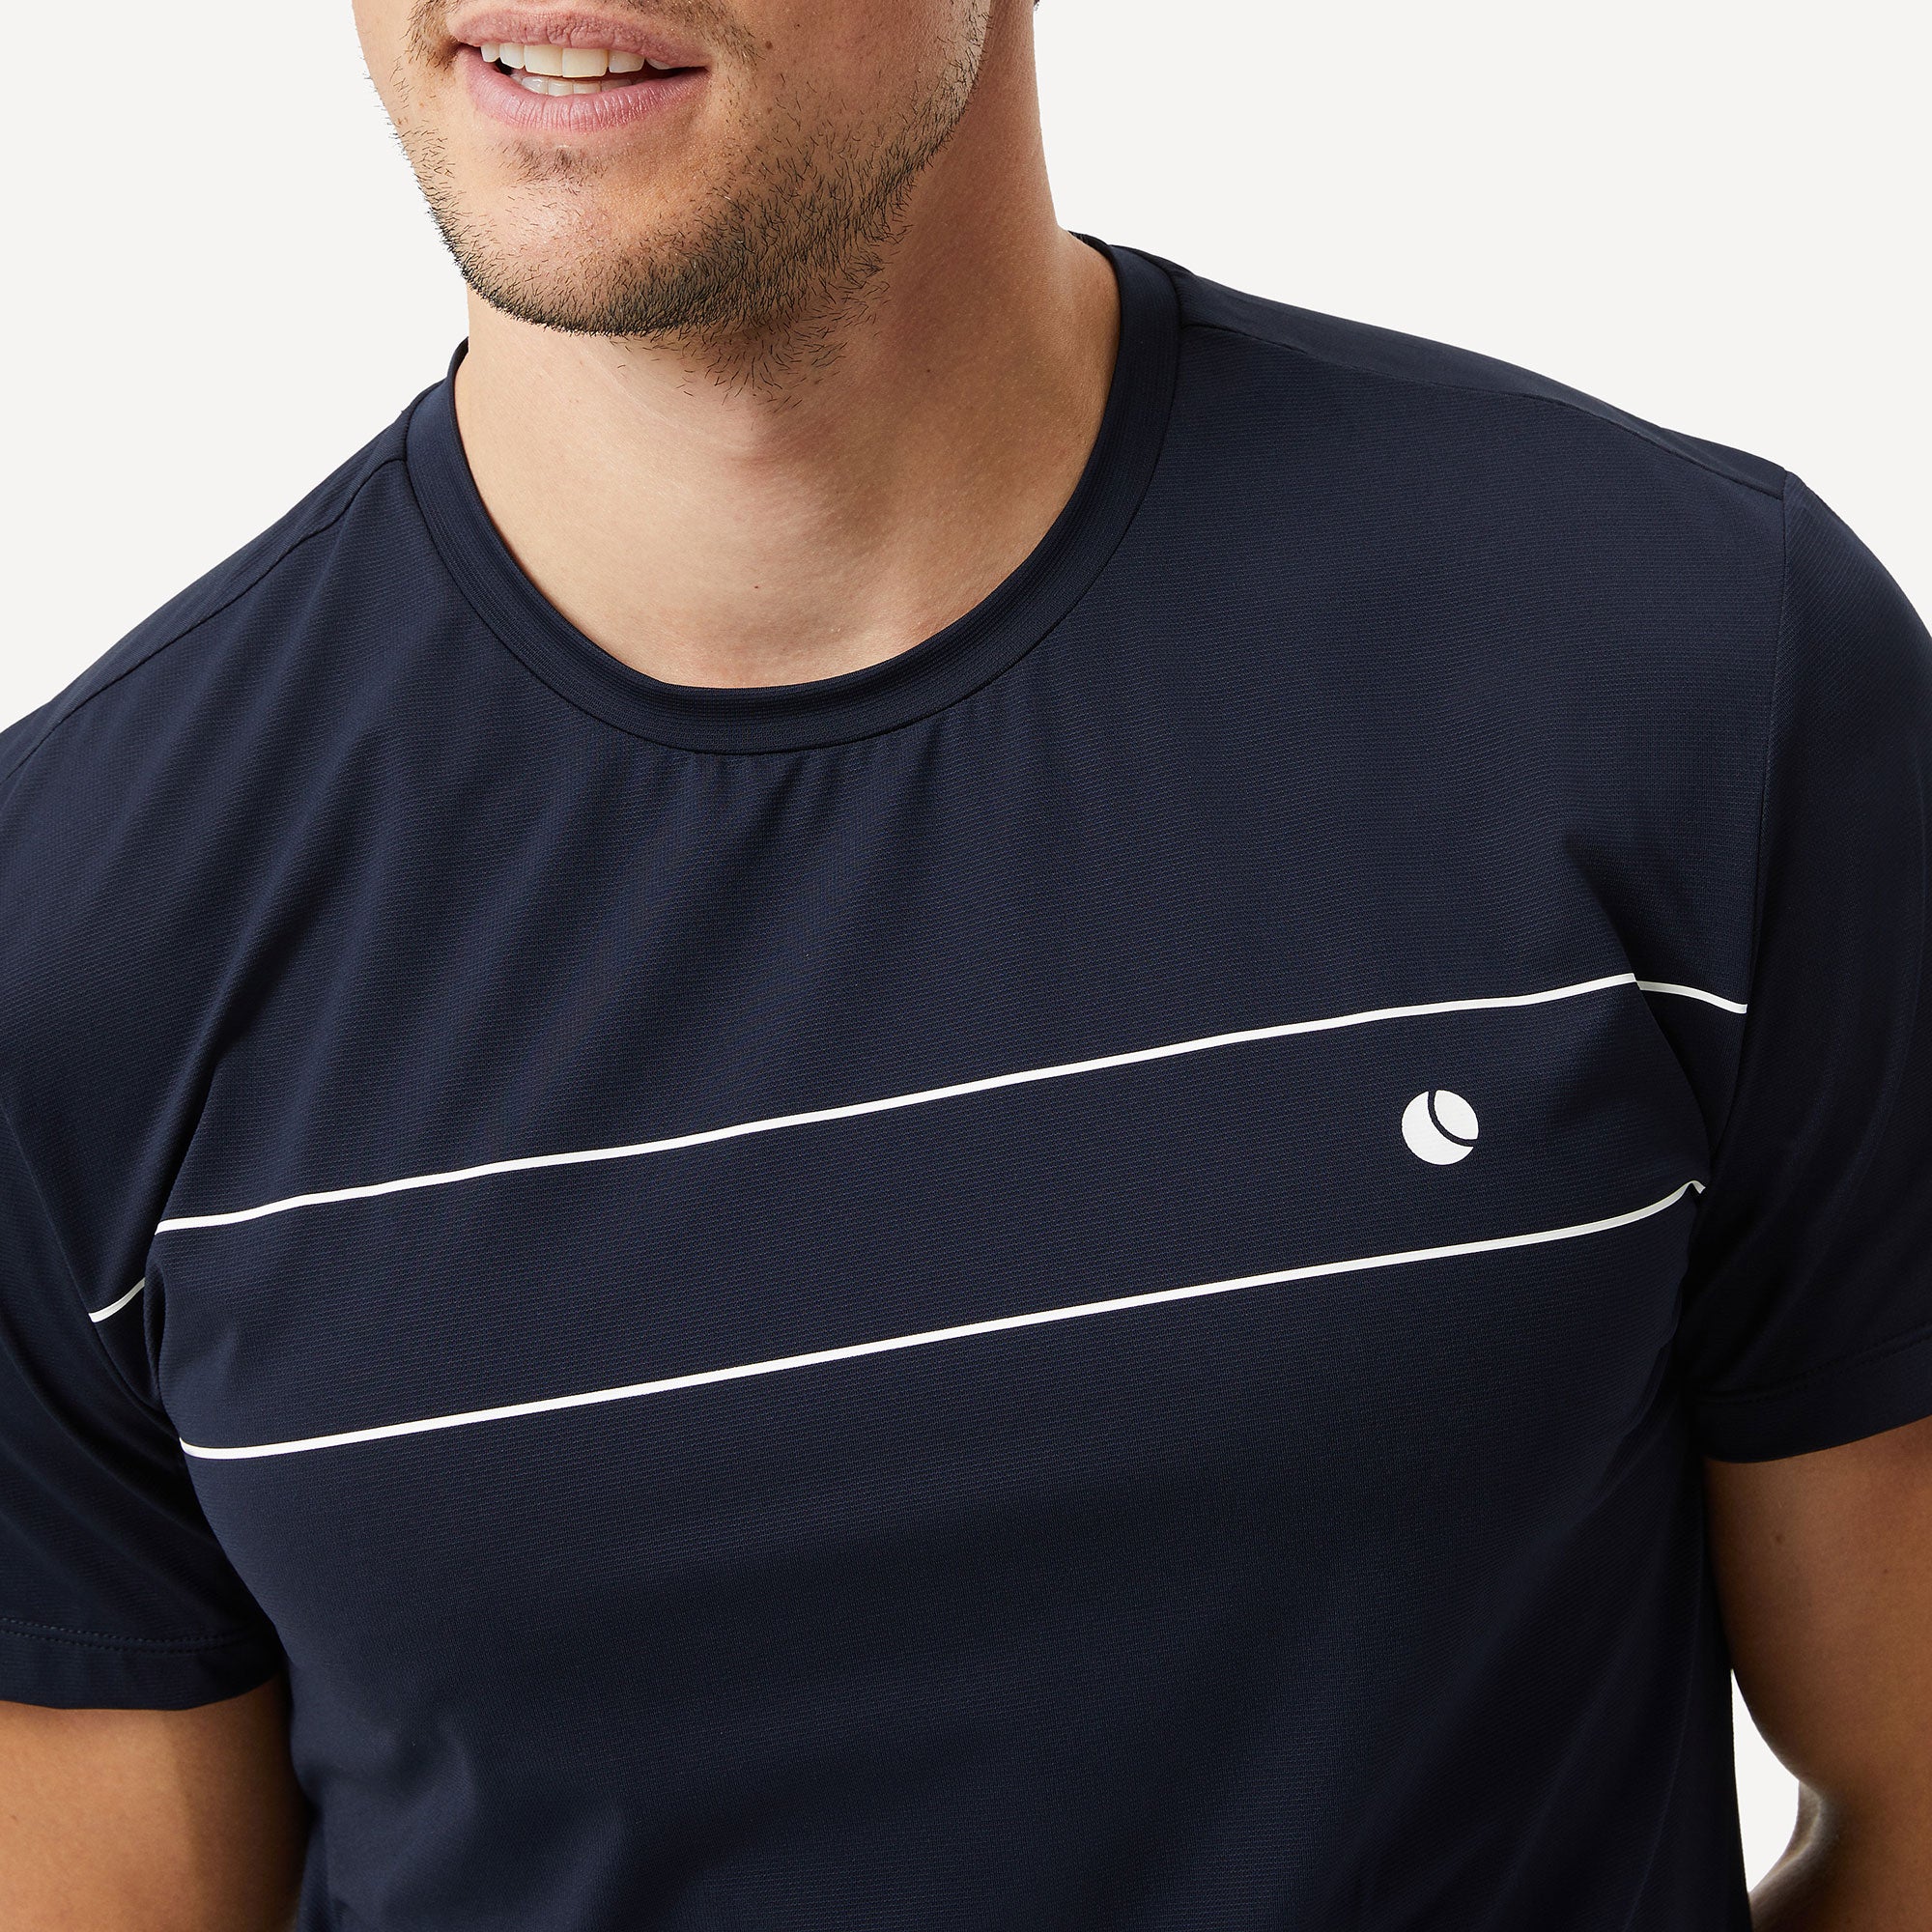 Björn Borg Ace Men's Light Tennis Shirt - Dark Blue (3)